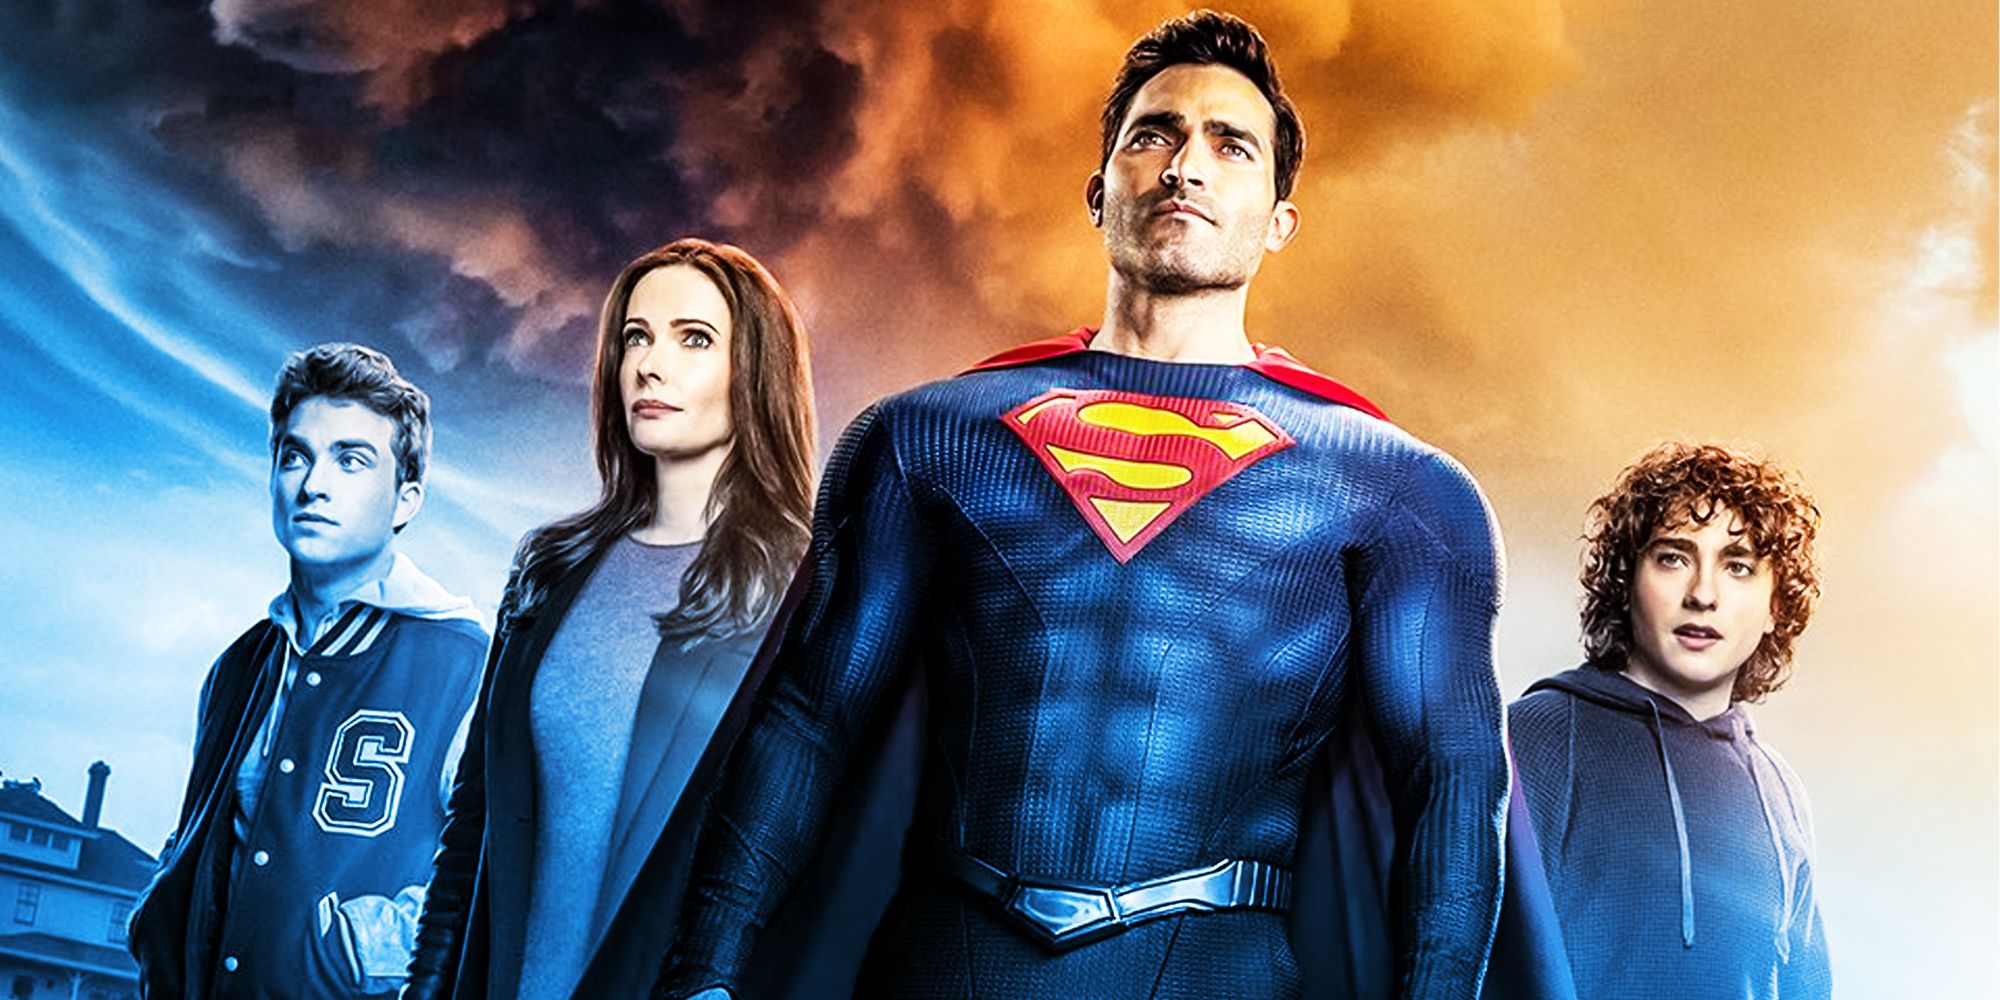 Superman and lois season 2 hiatus